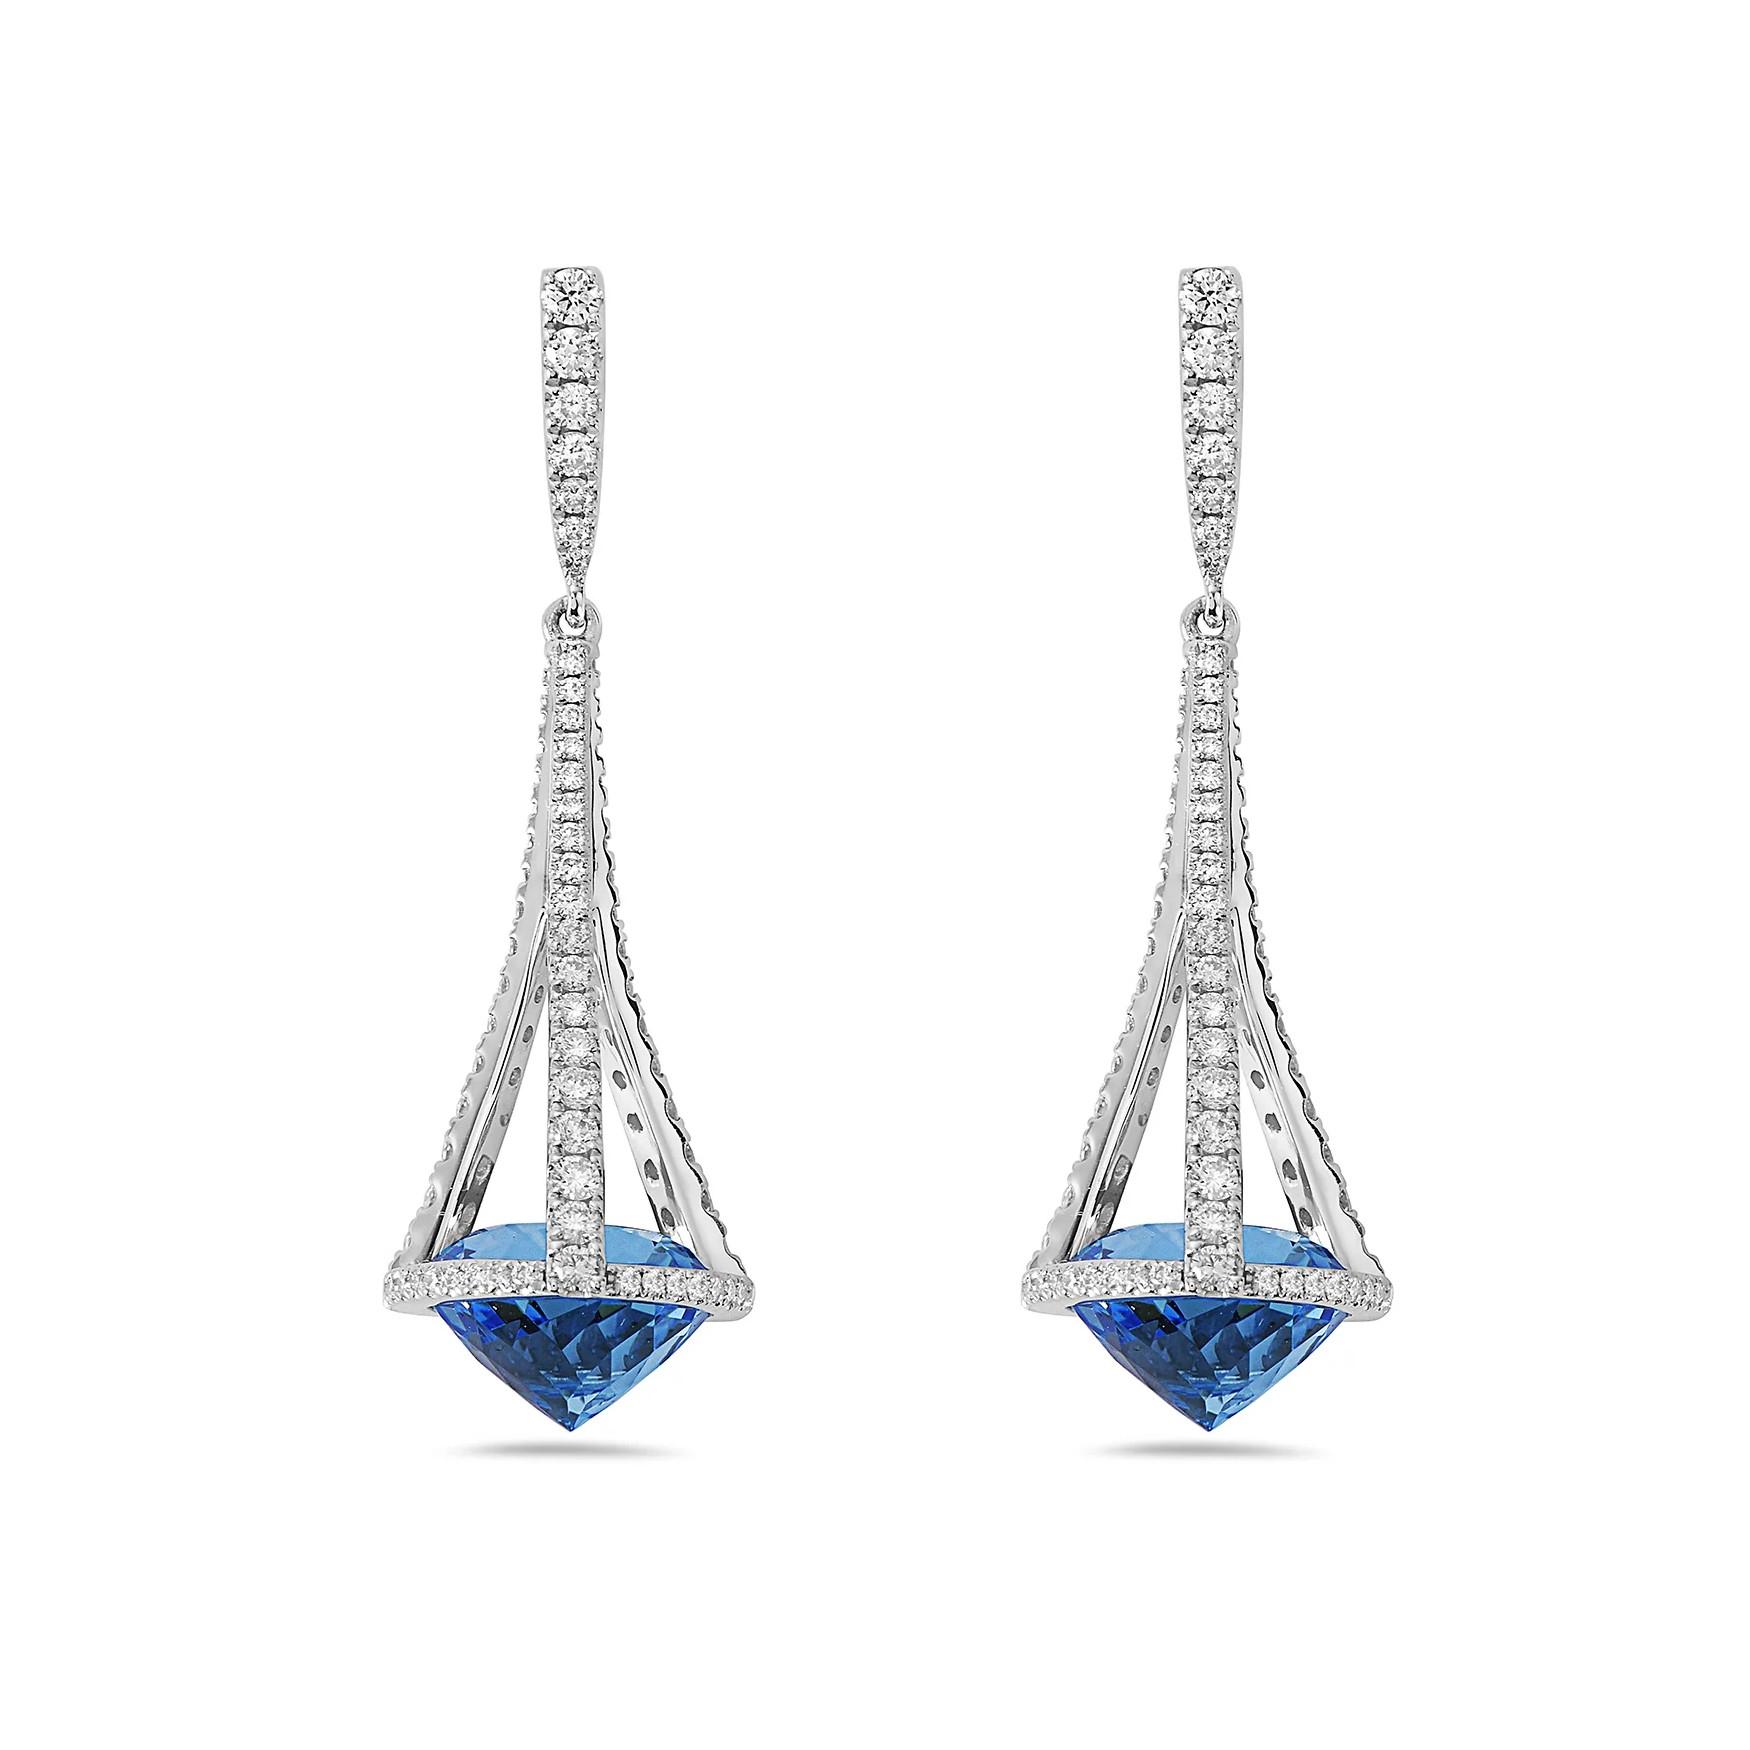 Charles Krypell London Blue Topaz and Diamond Chandelier Earrings 0